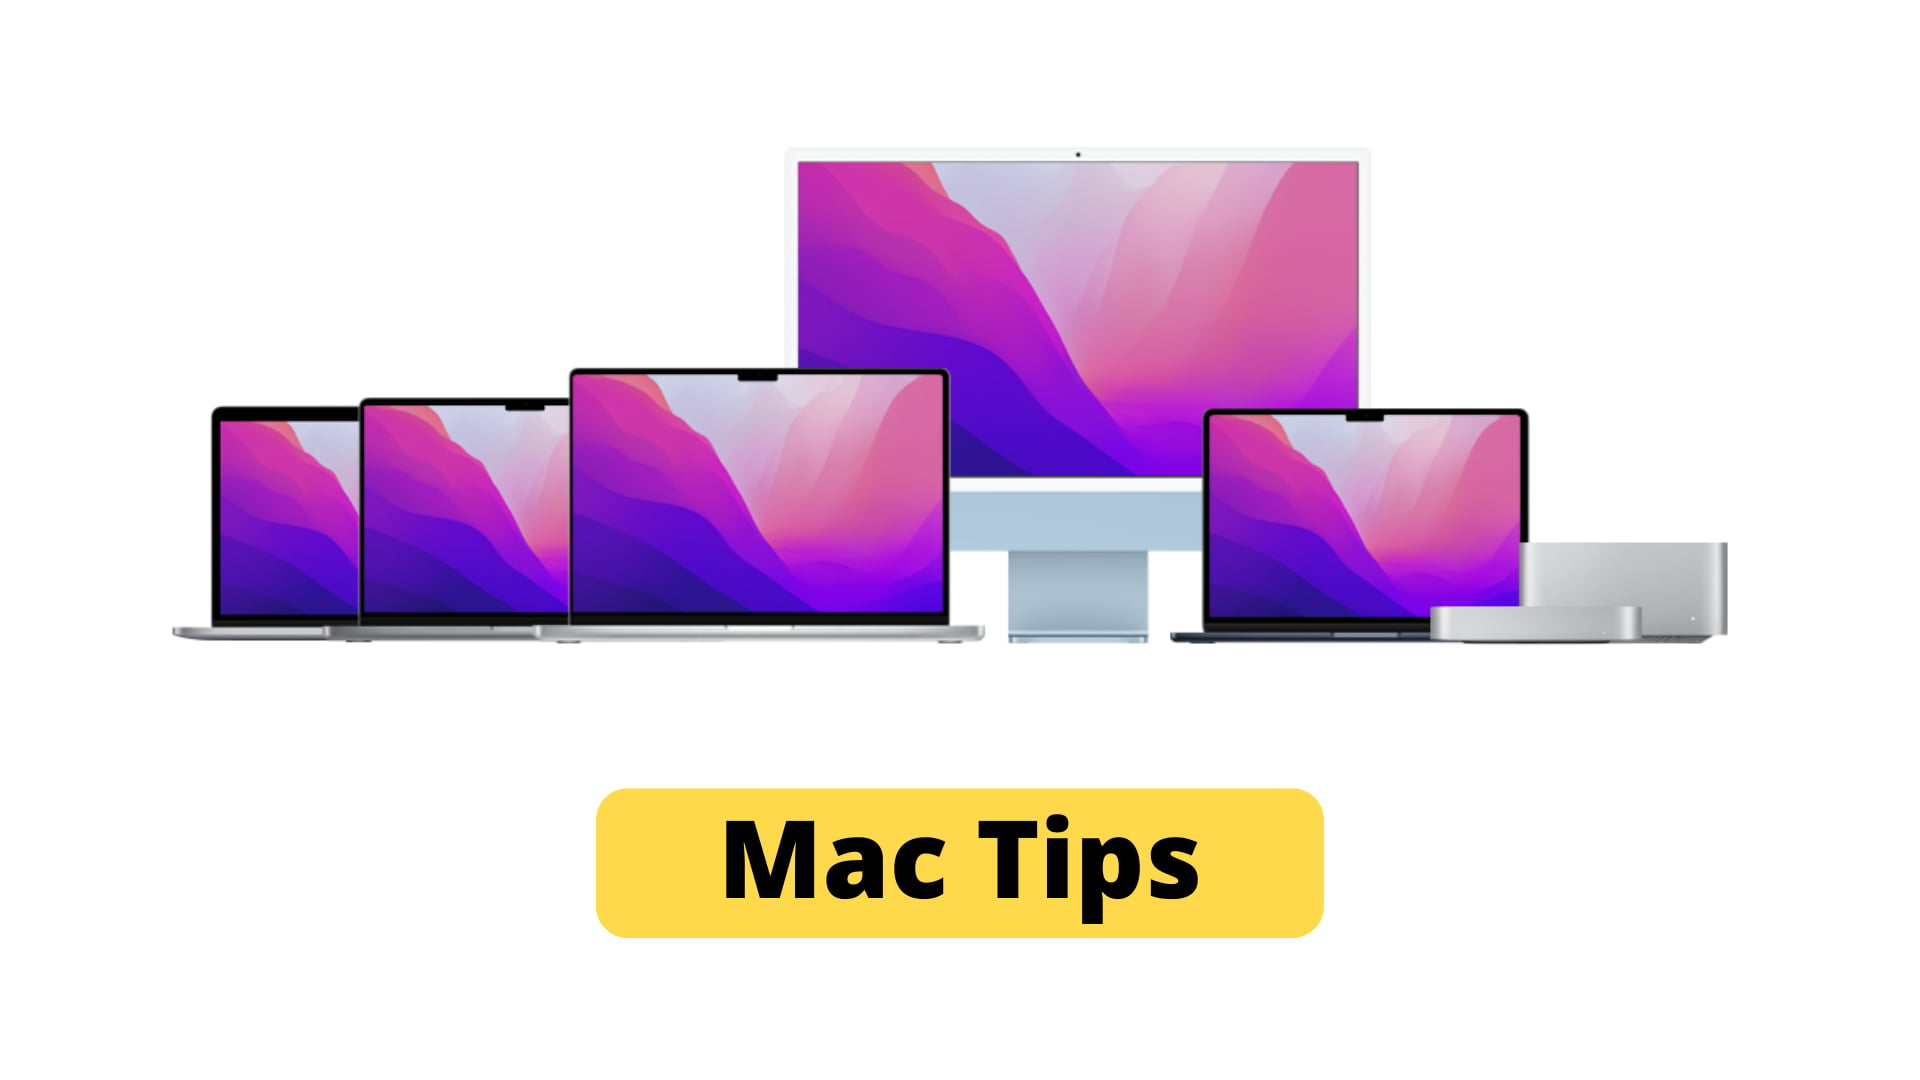 Mac tips